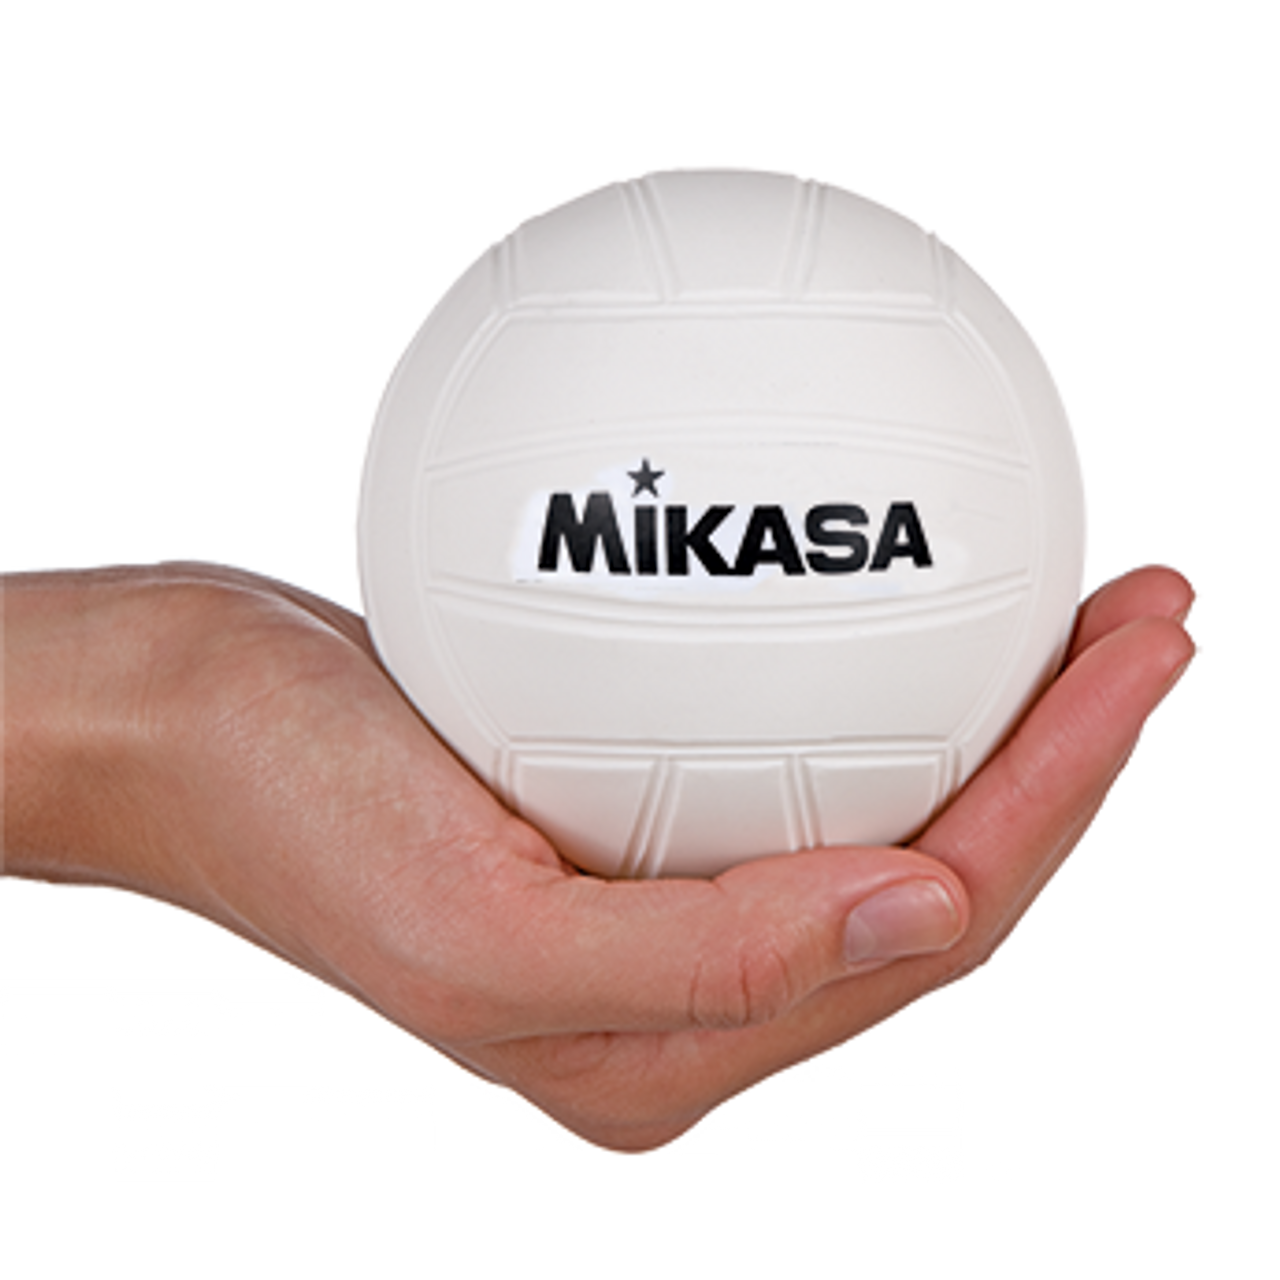 mini volleyball